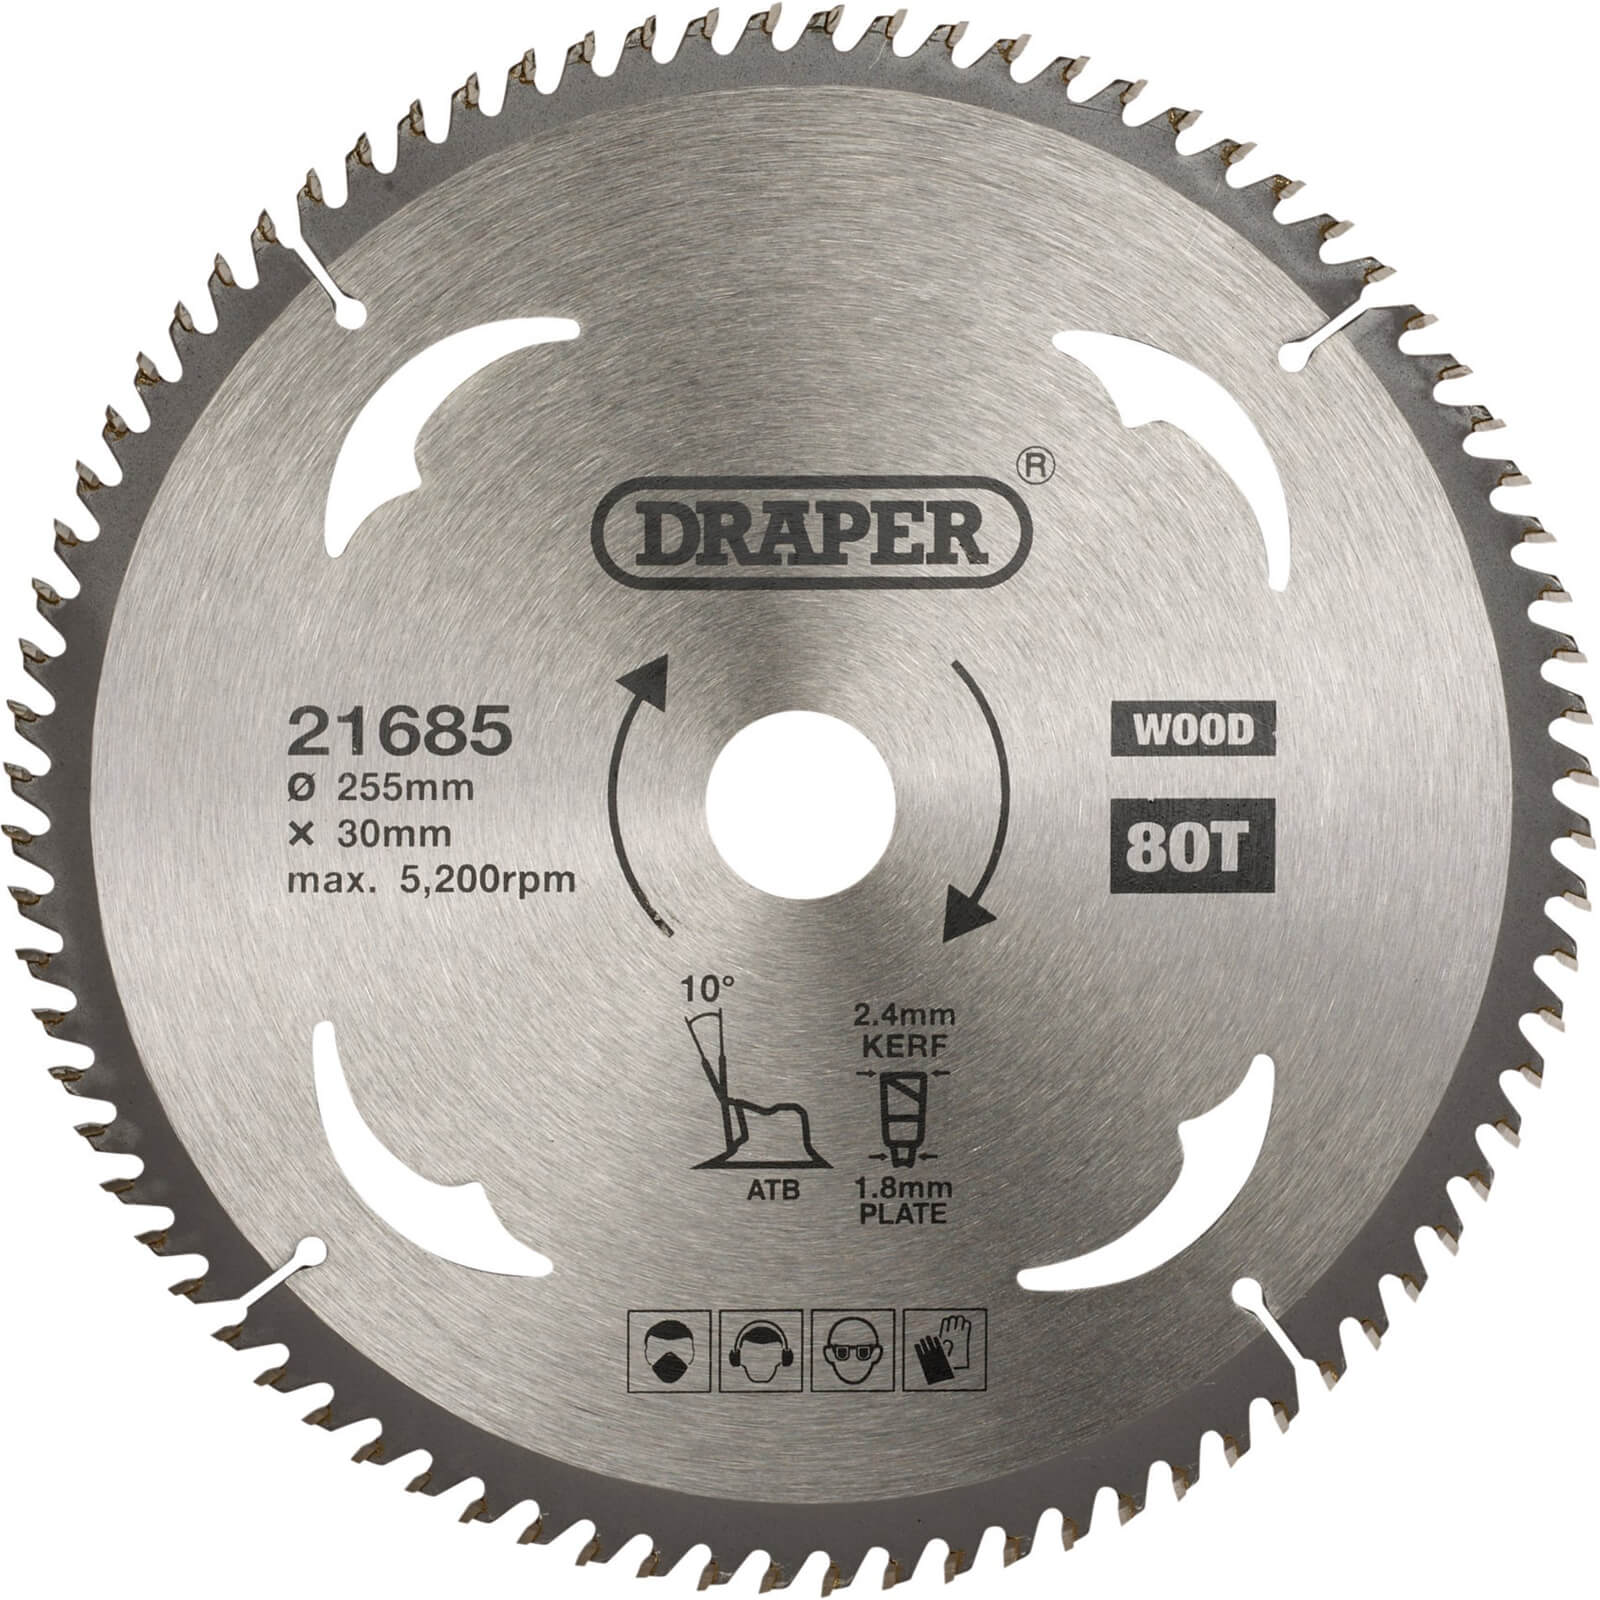 Image of Draper TCT Wood Cutting Circular Saw Blade 255mm 80T 30mm